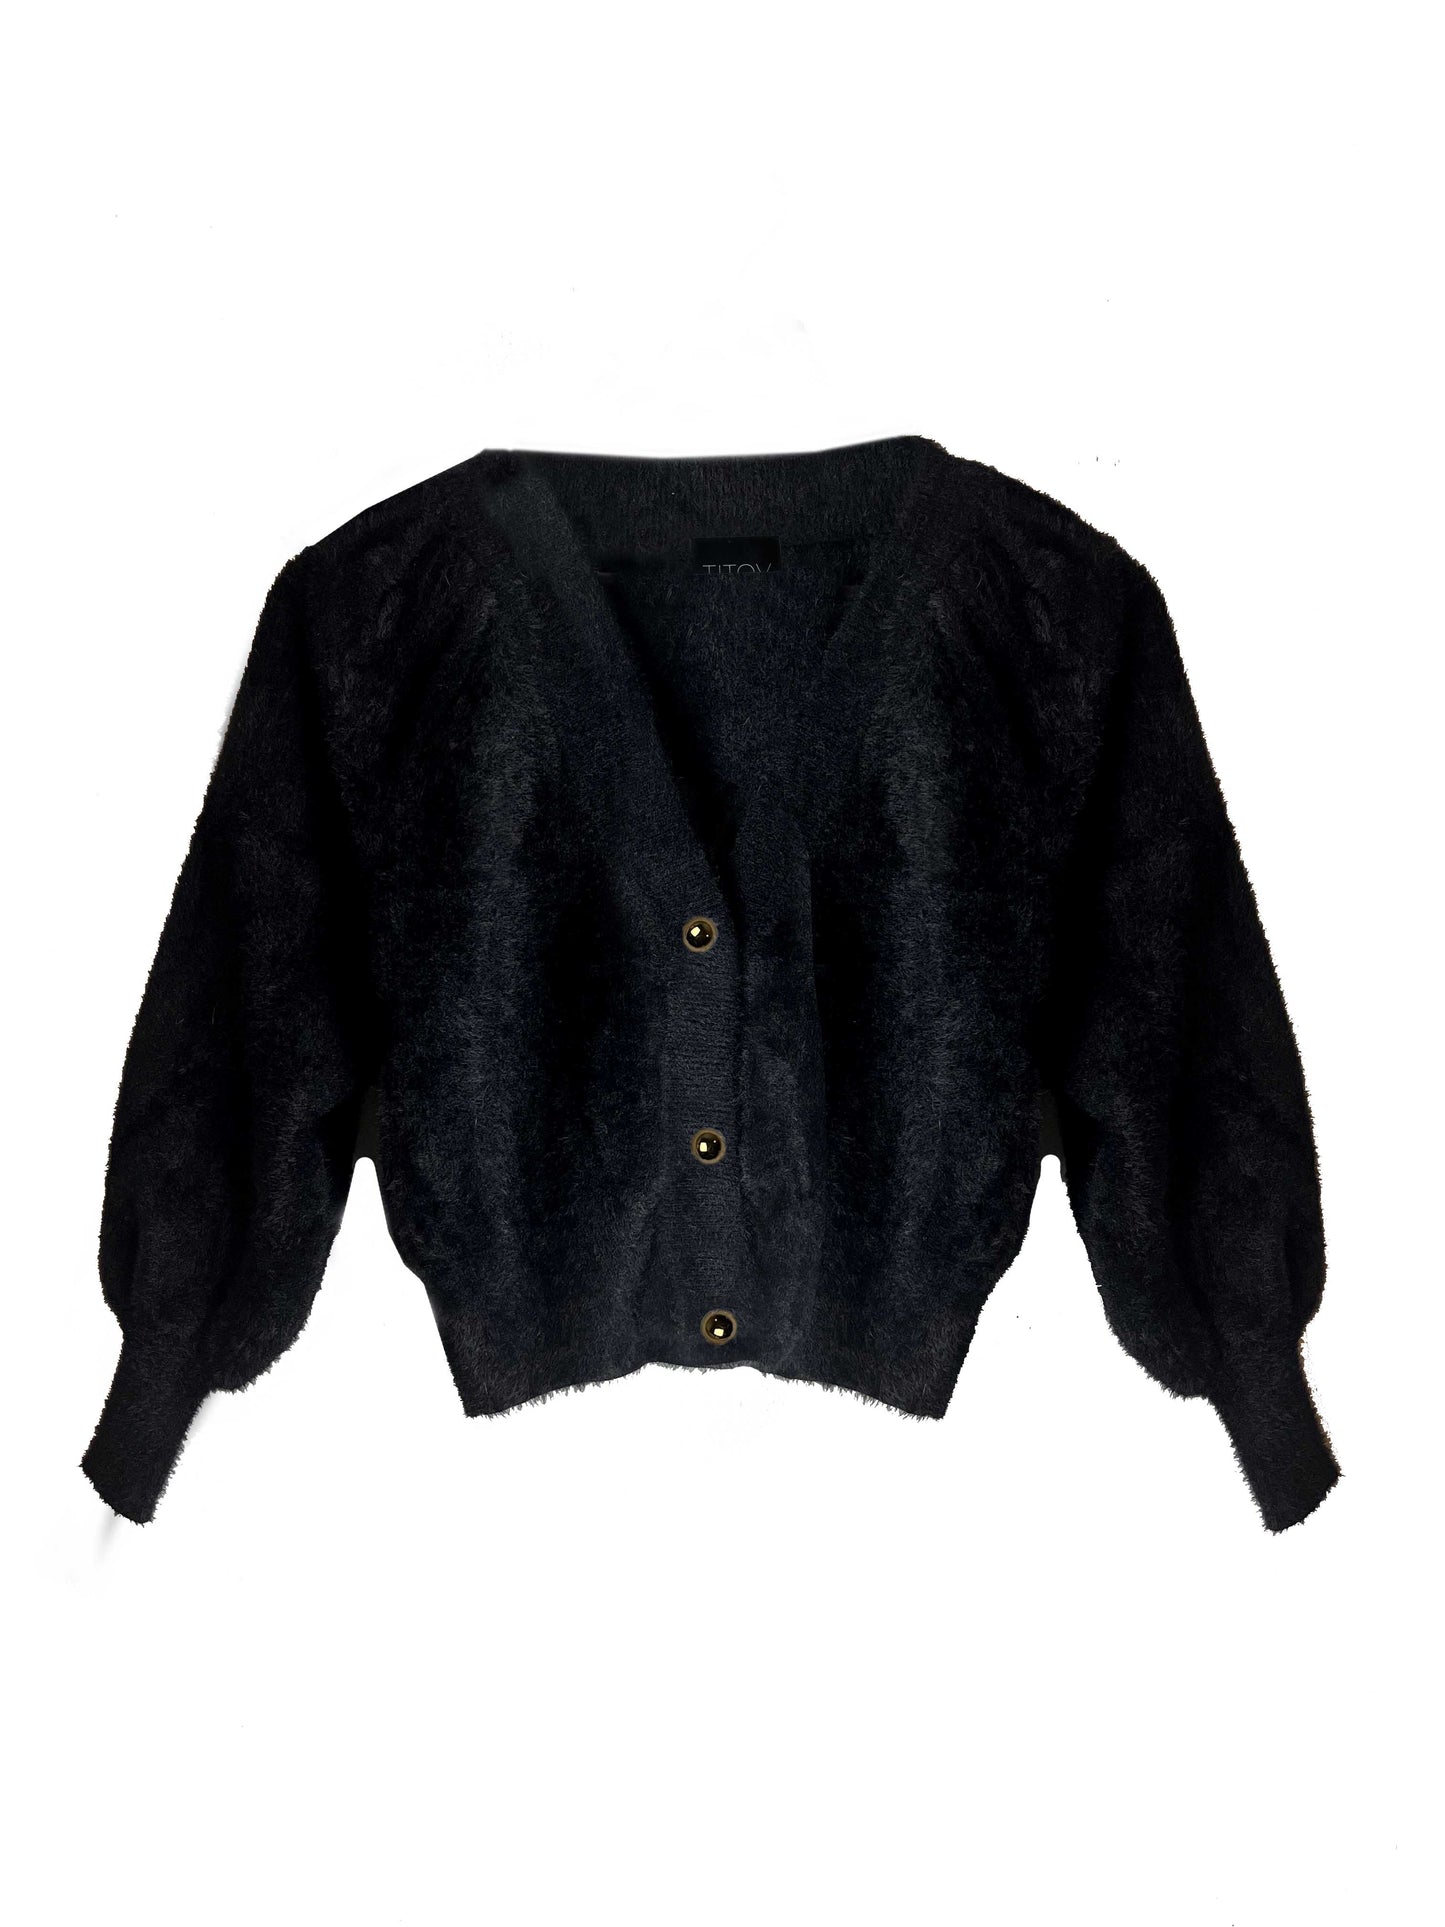 Fuzzy Cropped Sweater - Black